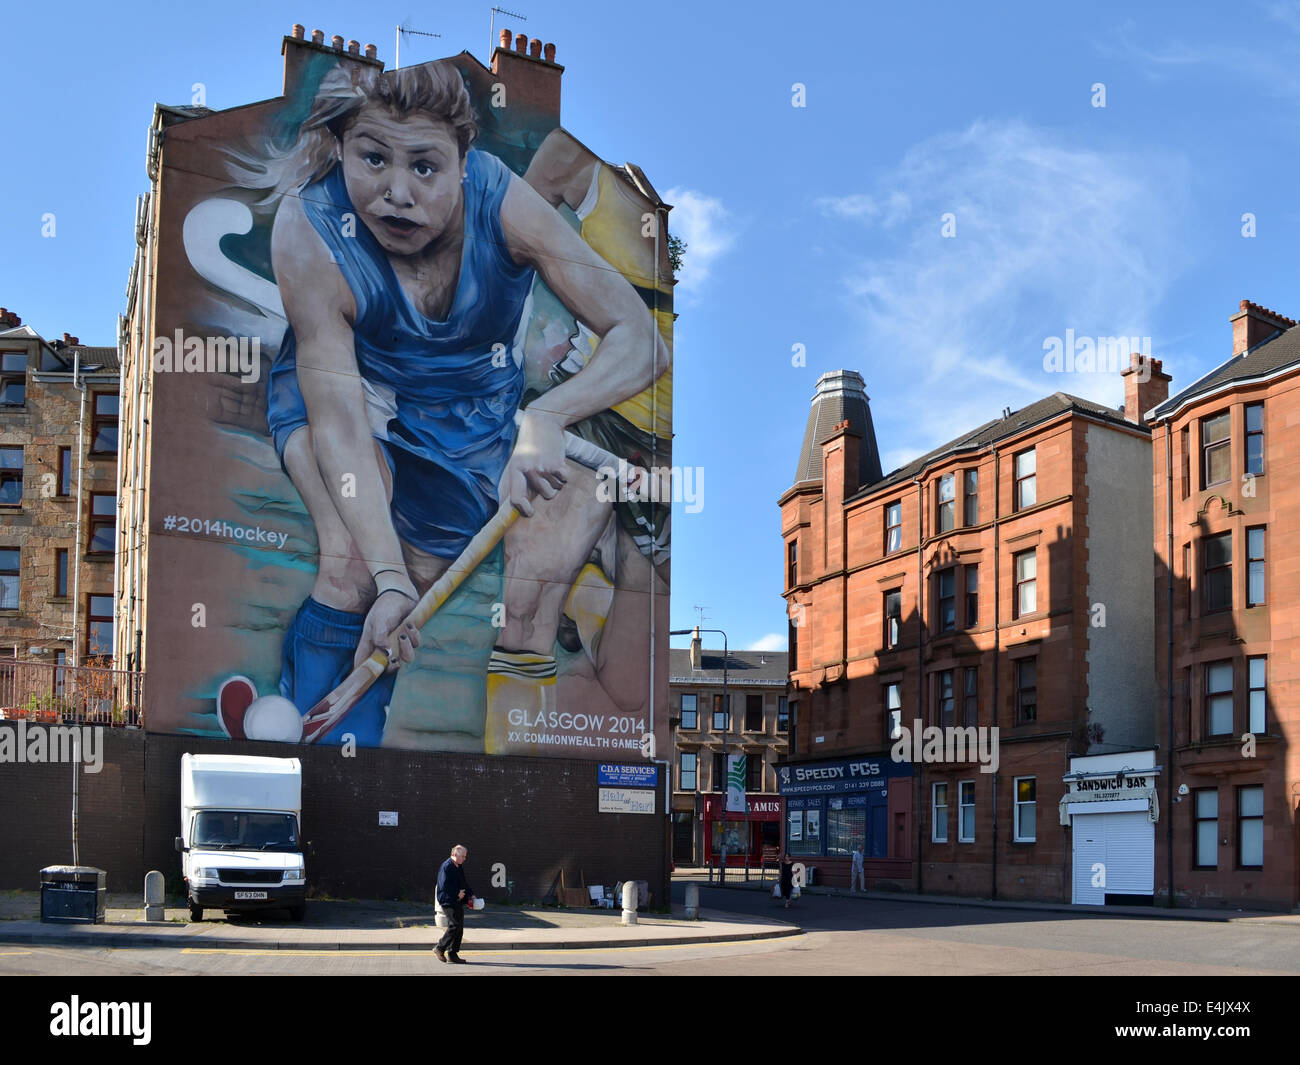 Glasgow Commonwealth Games 2014 Graffiti am Giebel endet am Busbahnhof Partick, Glasgow Stockfoto